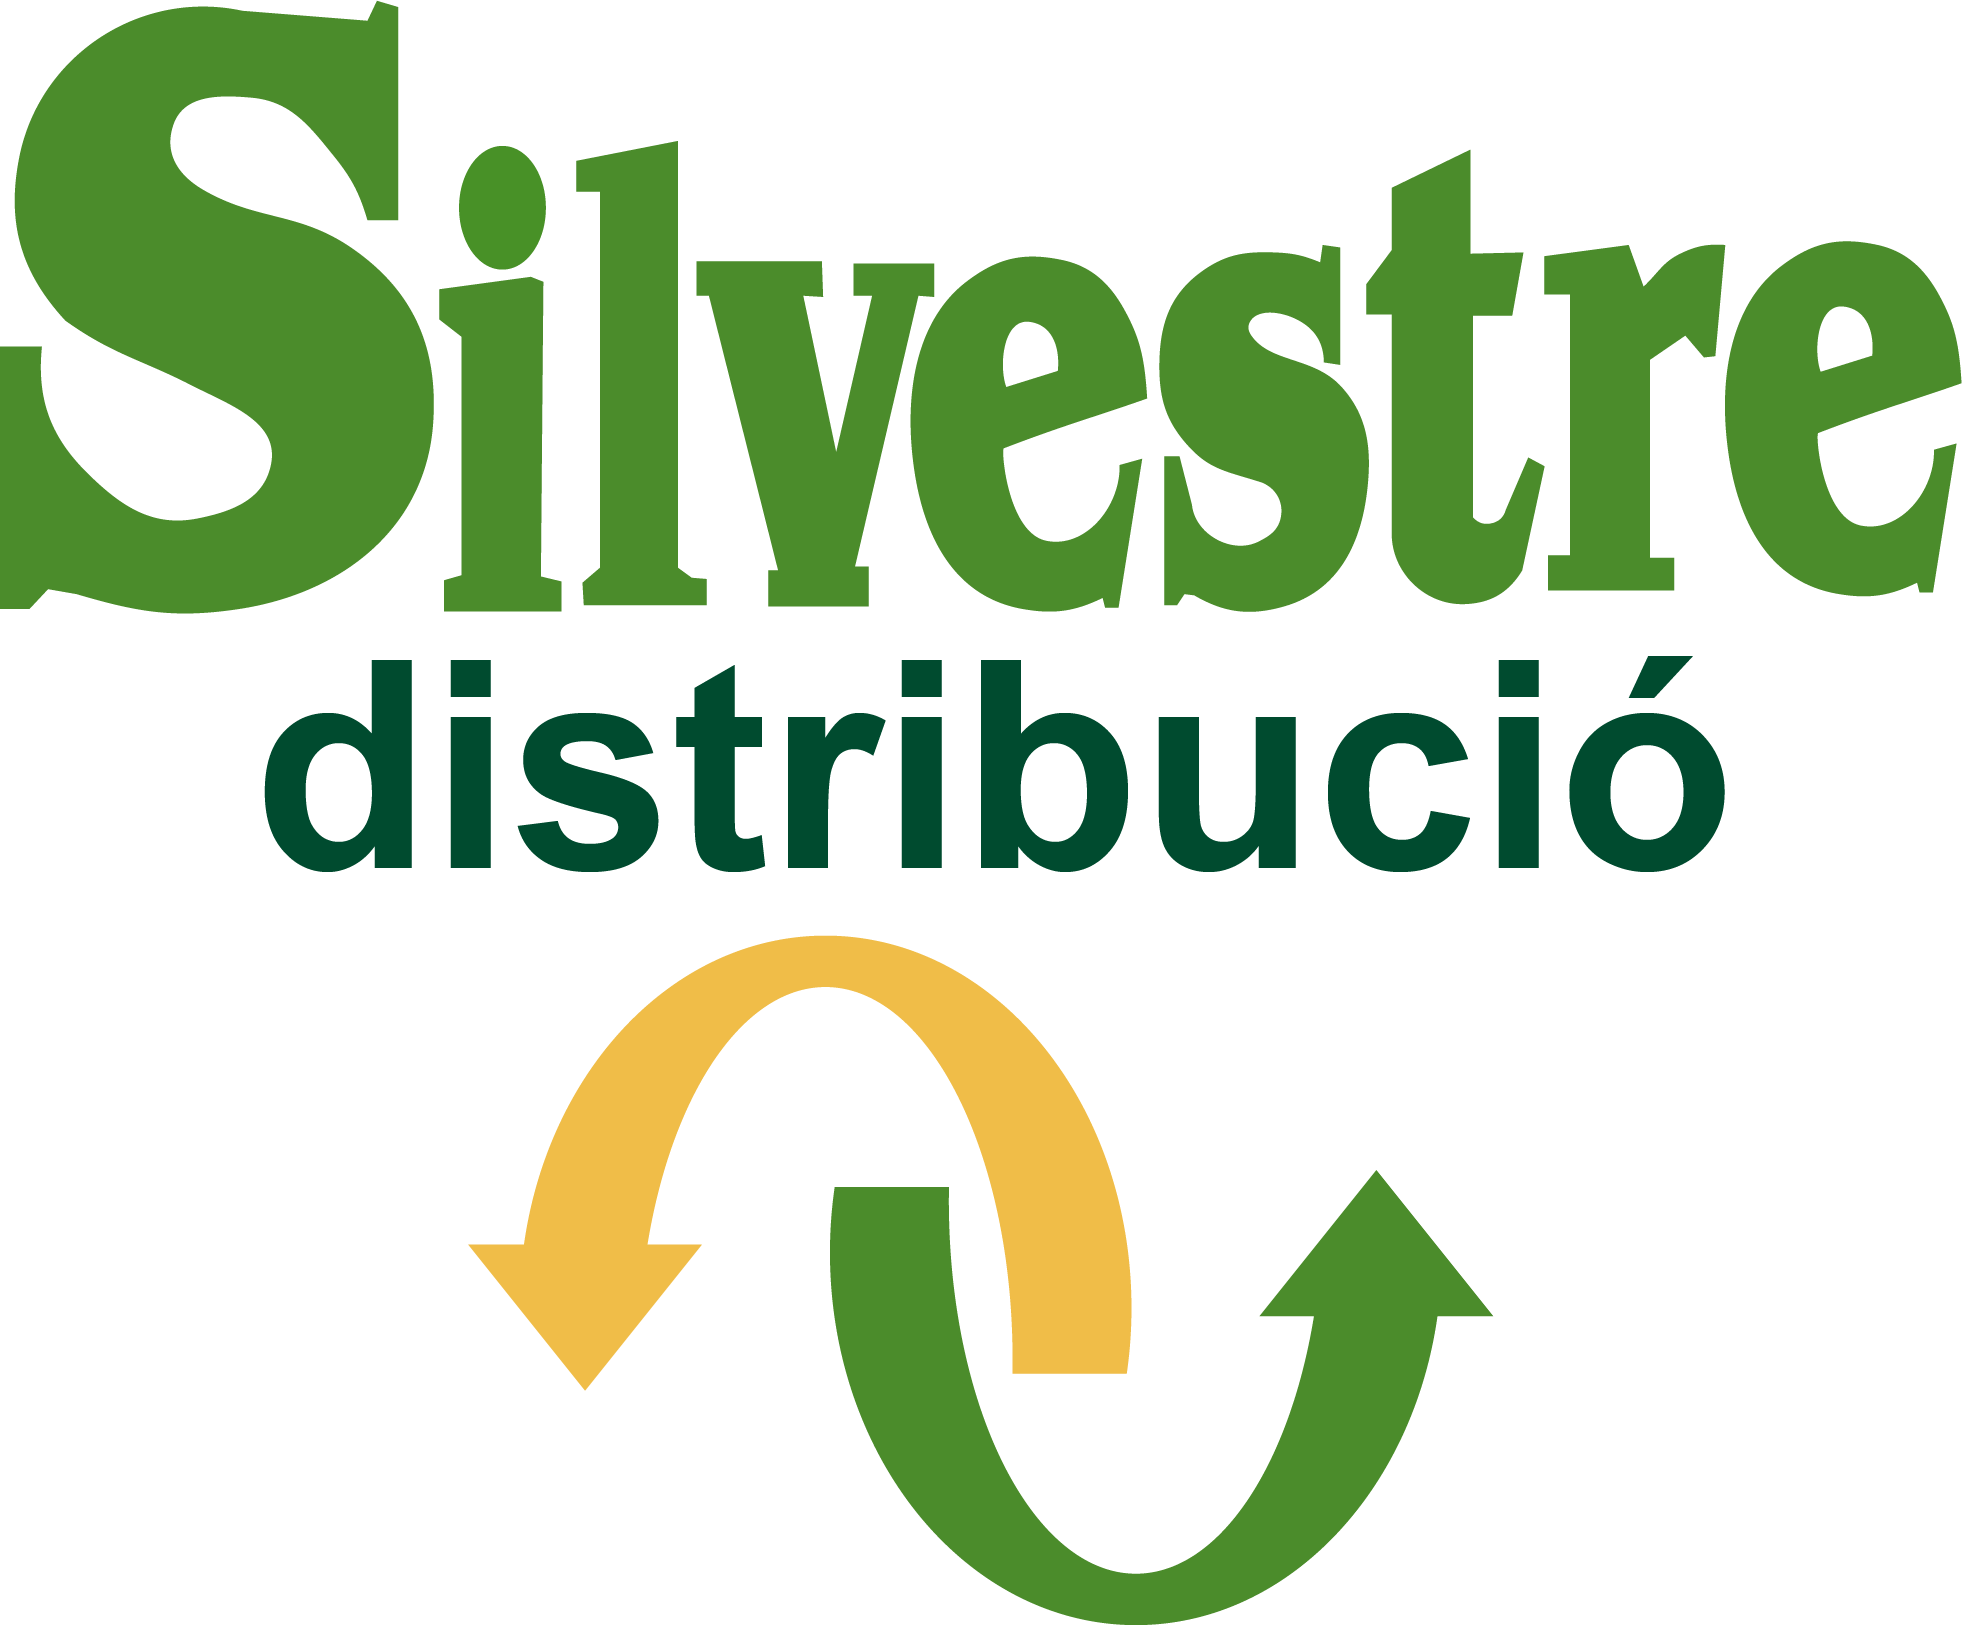 Distribuidora Silvestre – Distribución de productos para hostelería